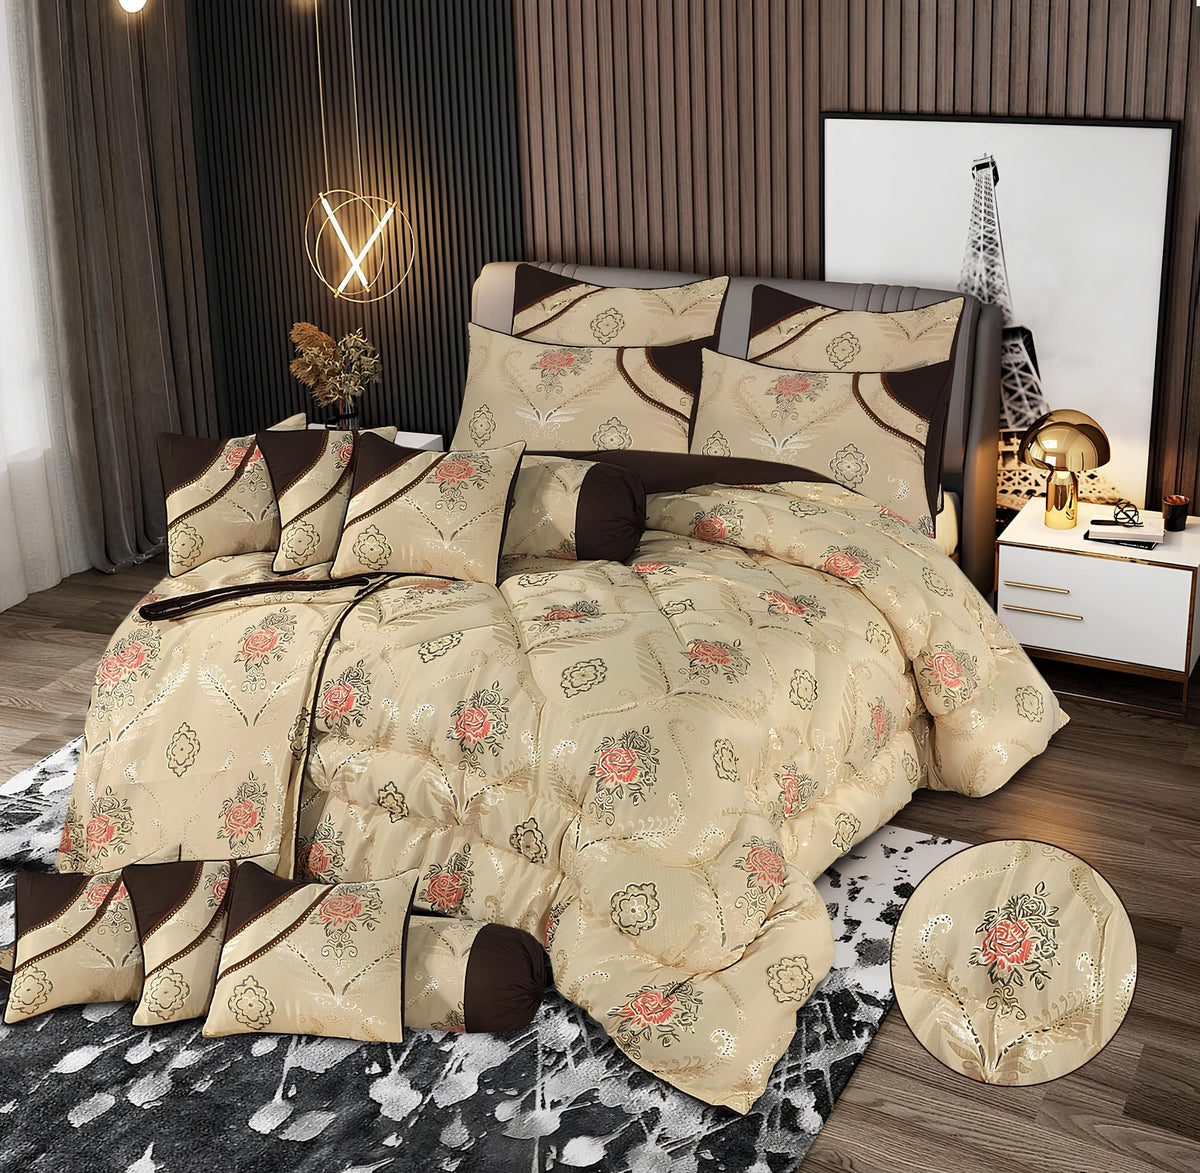 Royal Shanghai 14 Pcs Bedding Set With Filled Comforter-Cream & Brown